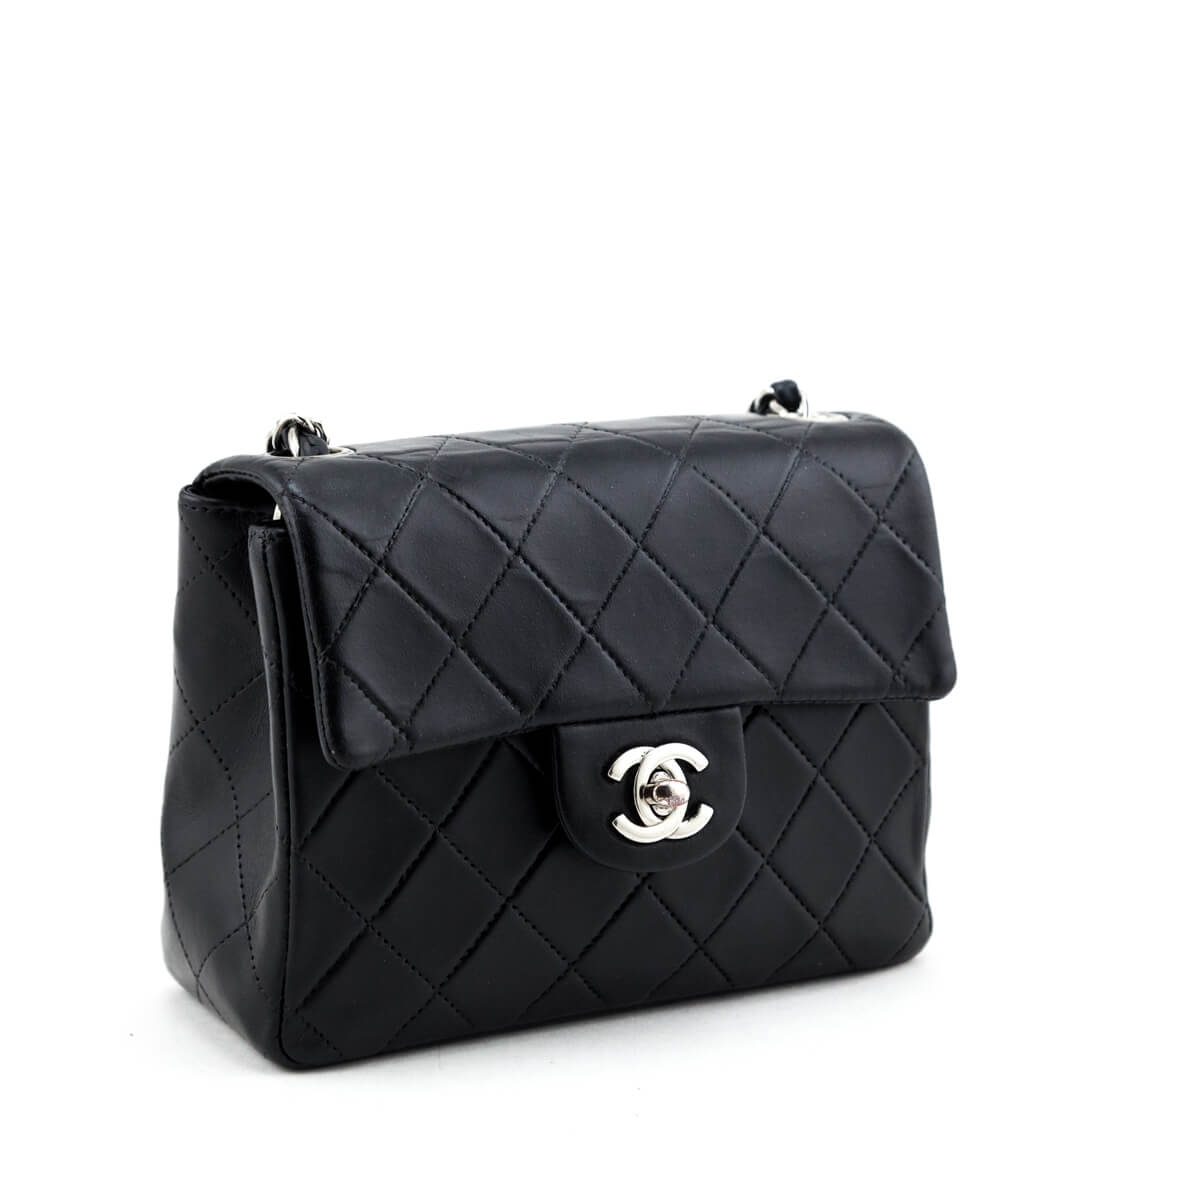 Chanel Calfskin Small Gabrielle White Black Bag (Preloved)